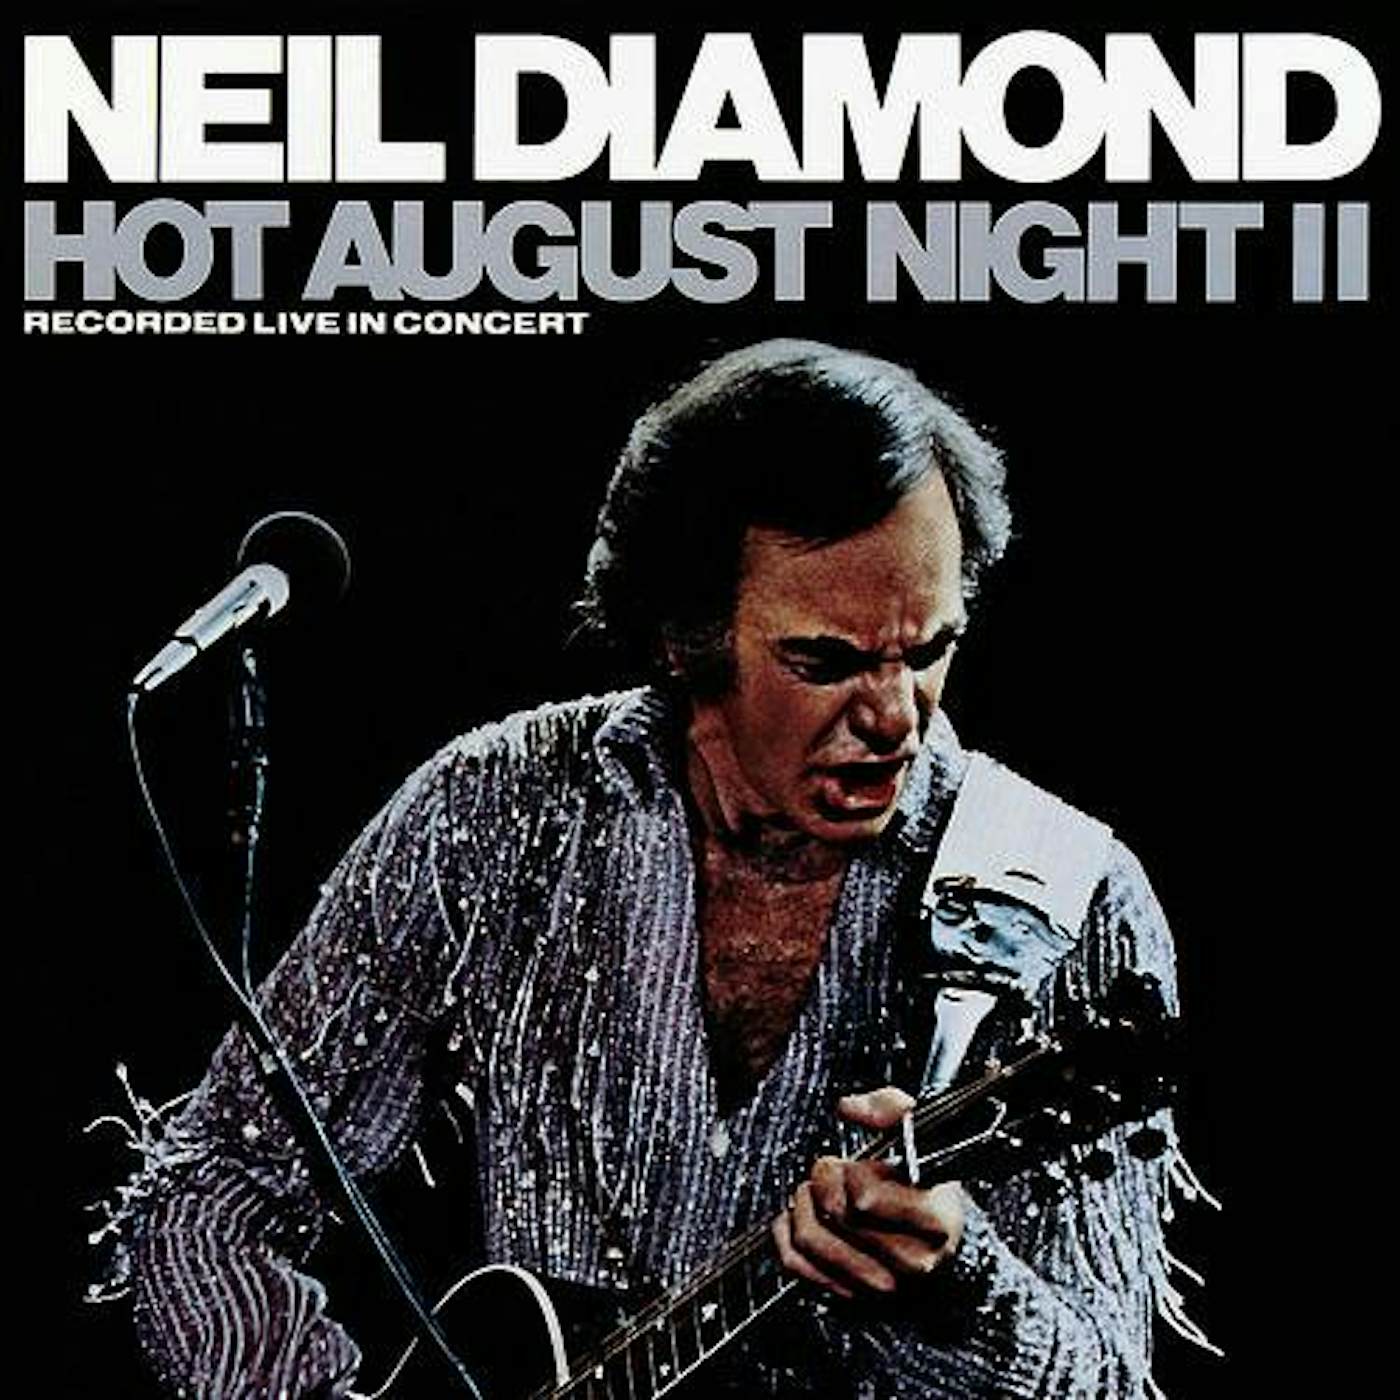 Neil Diamond Hot August Night II Vinyl Record